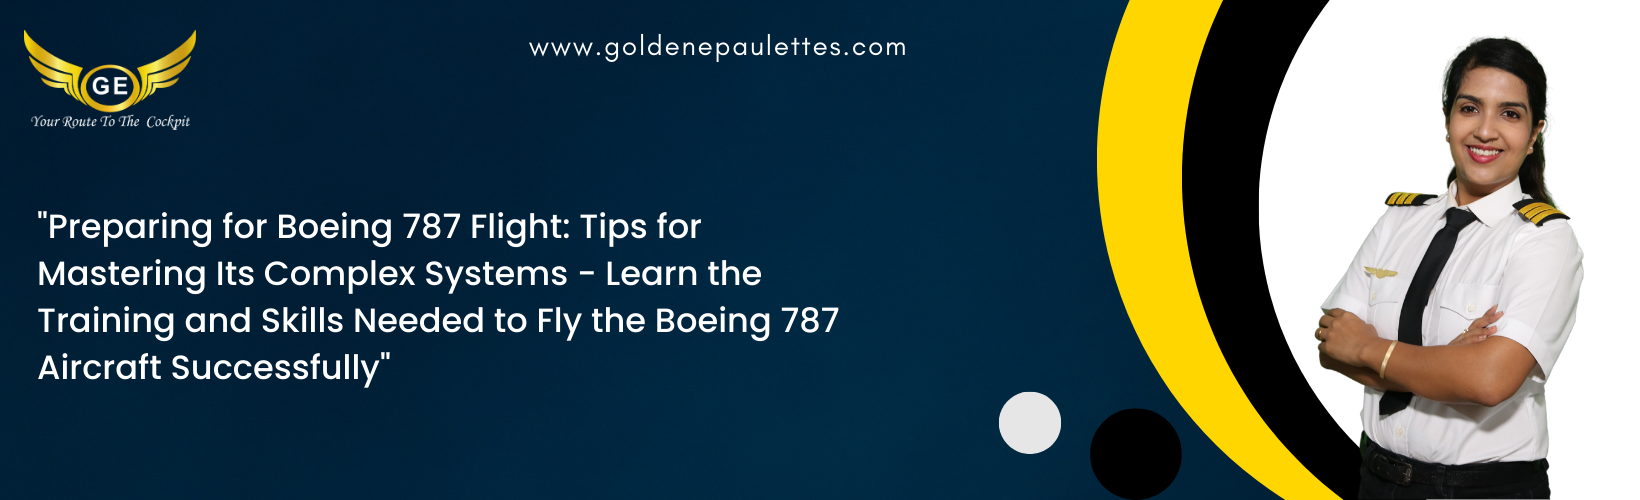 Boeing 787 Training